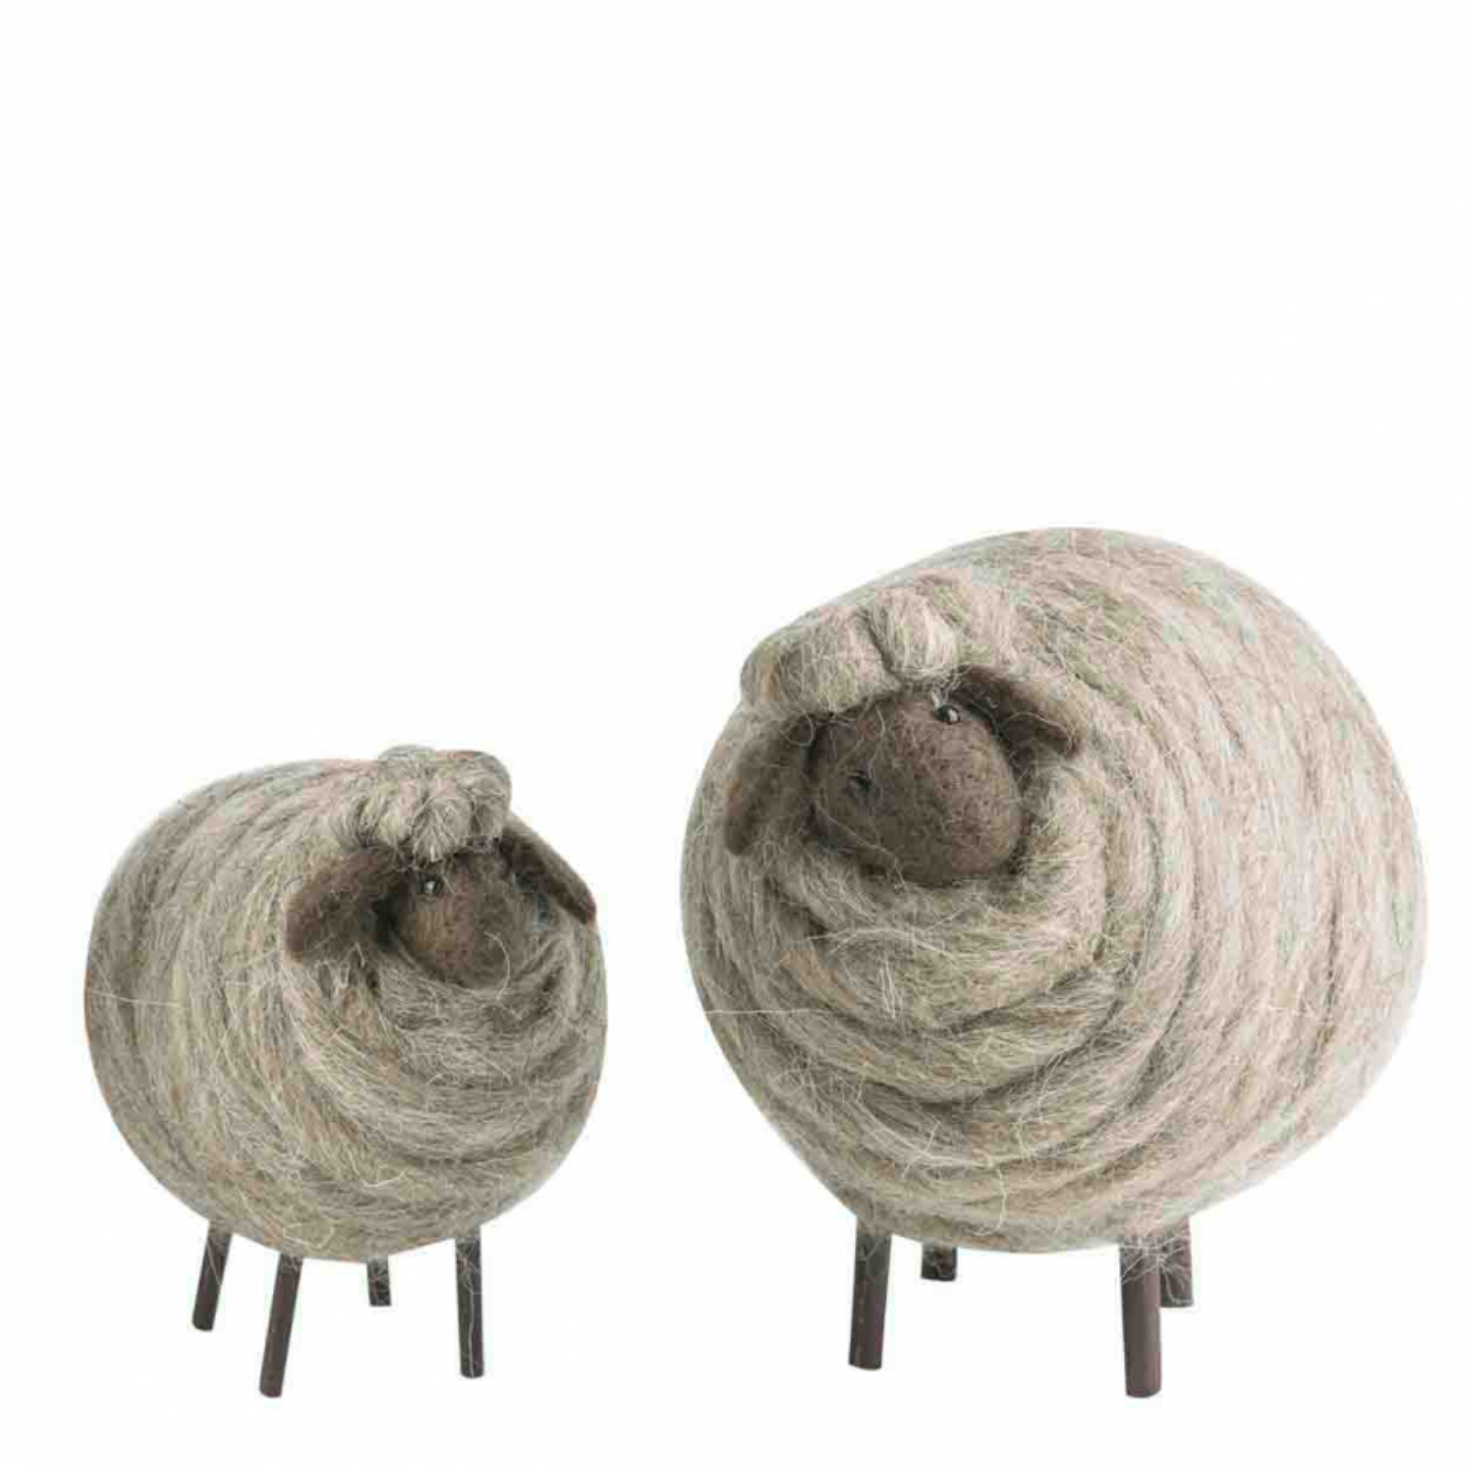 Small Wool and Wood Sheep